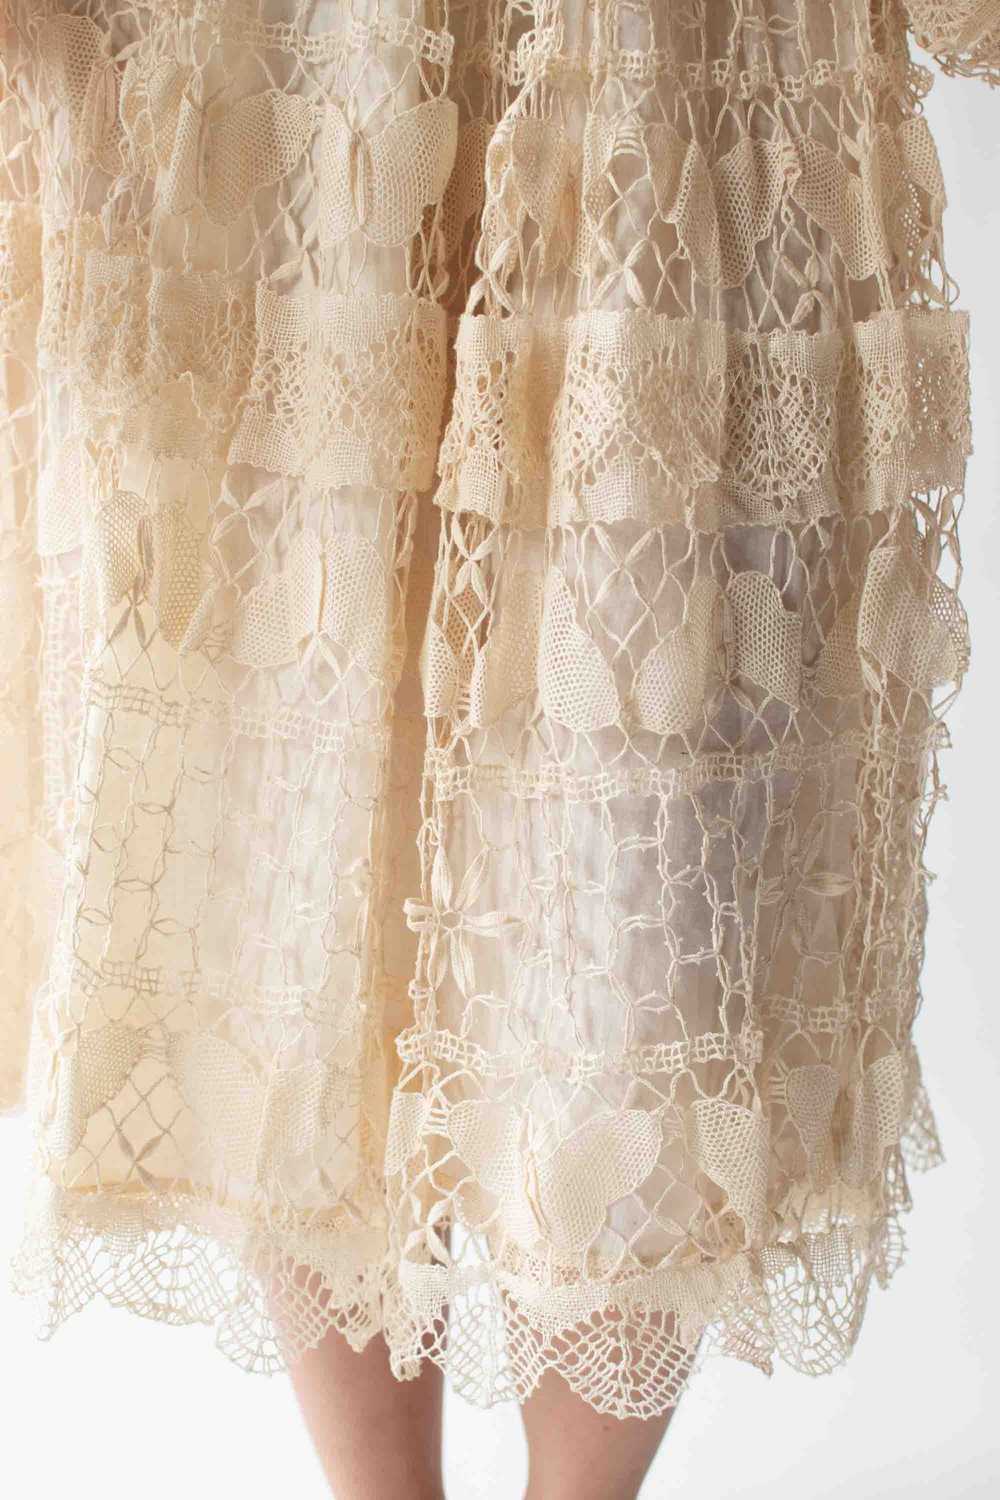 1970s Crochet Dress Set - image 7